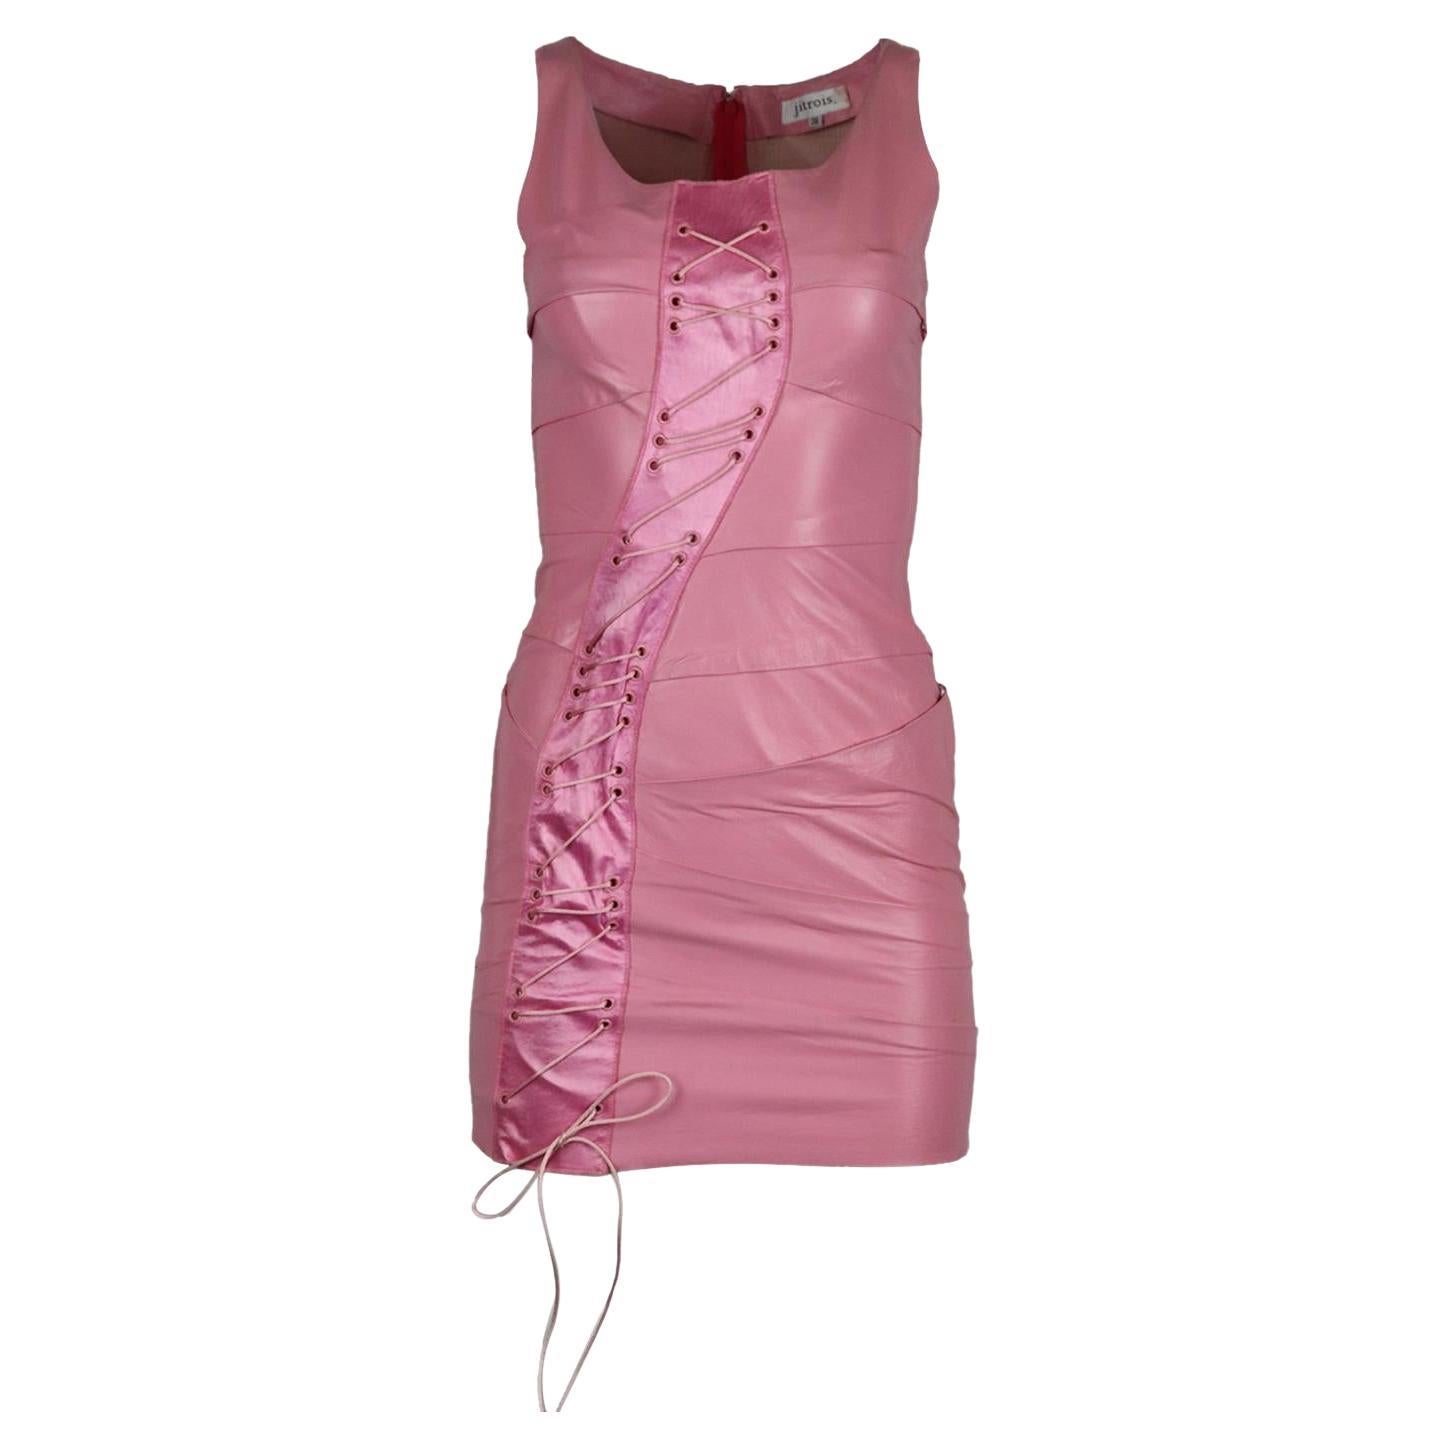 Jitrois Vintage Lace Up Satin And Leather Mini Dress Fr 36 Uk 8